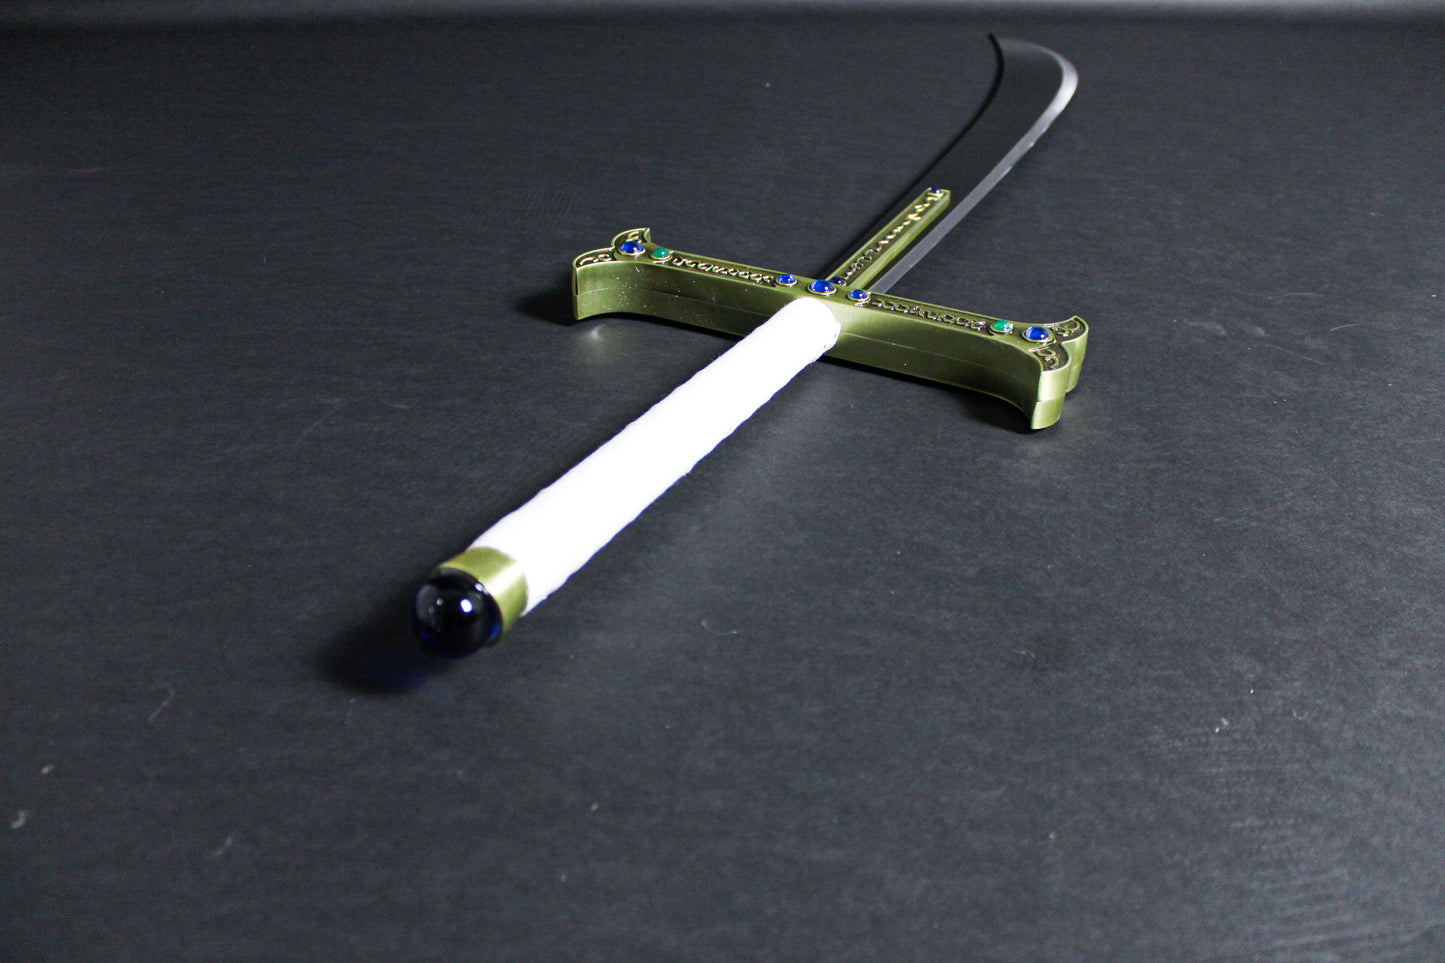 CAESARS - Mihawk Yoru Sword (Wide Blade) - now available